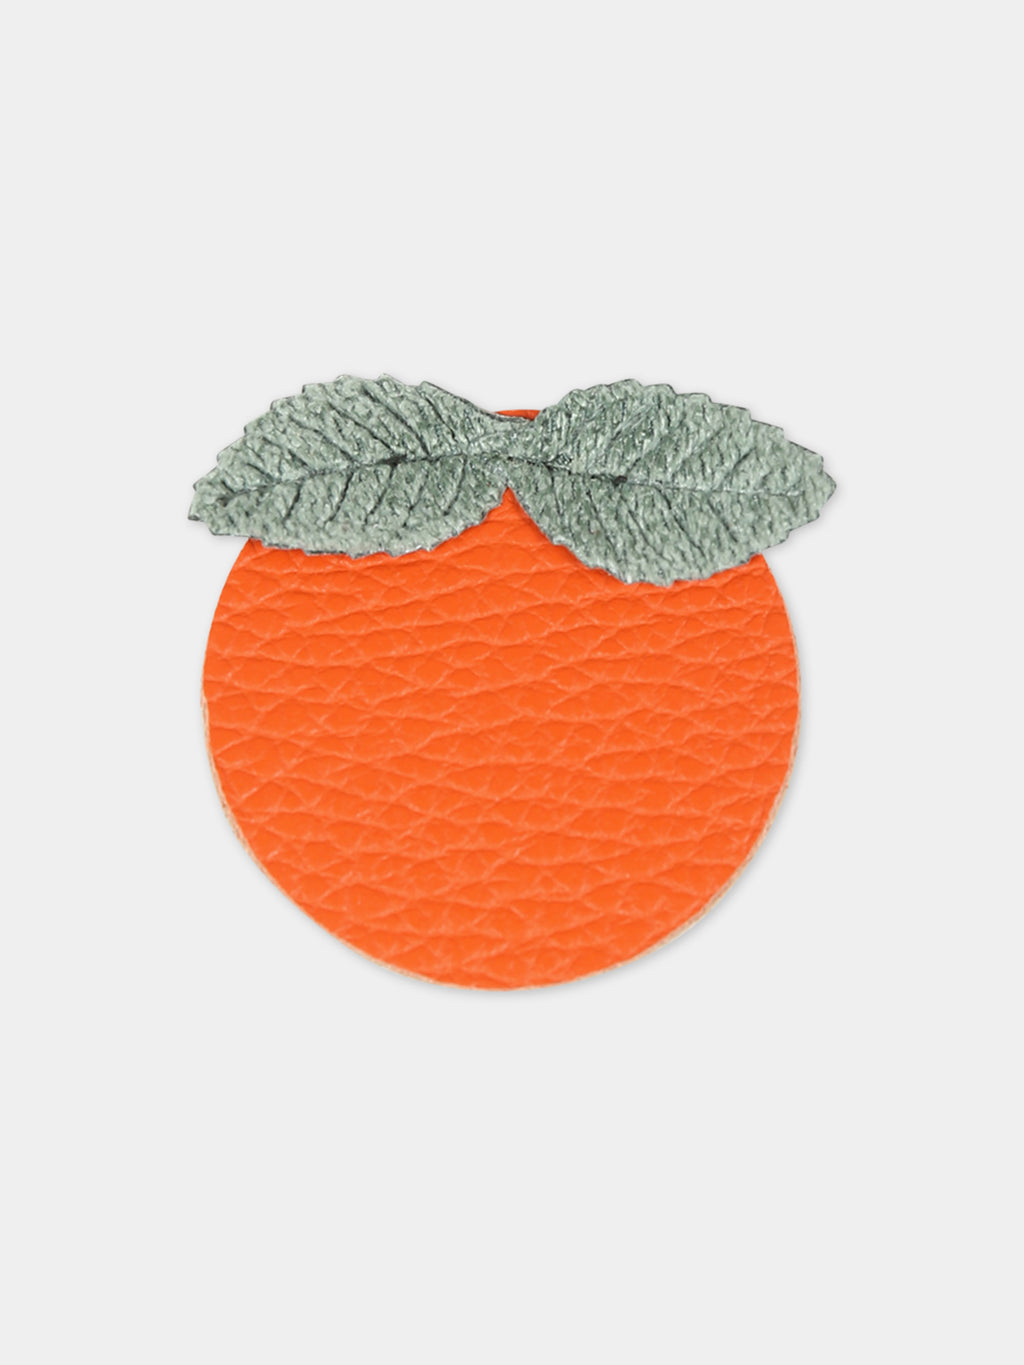 Spilla arancione per bambina con arancia